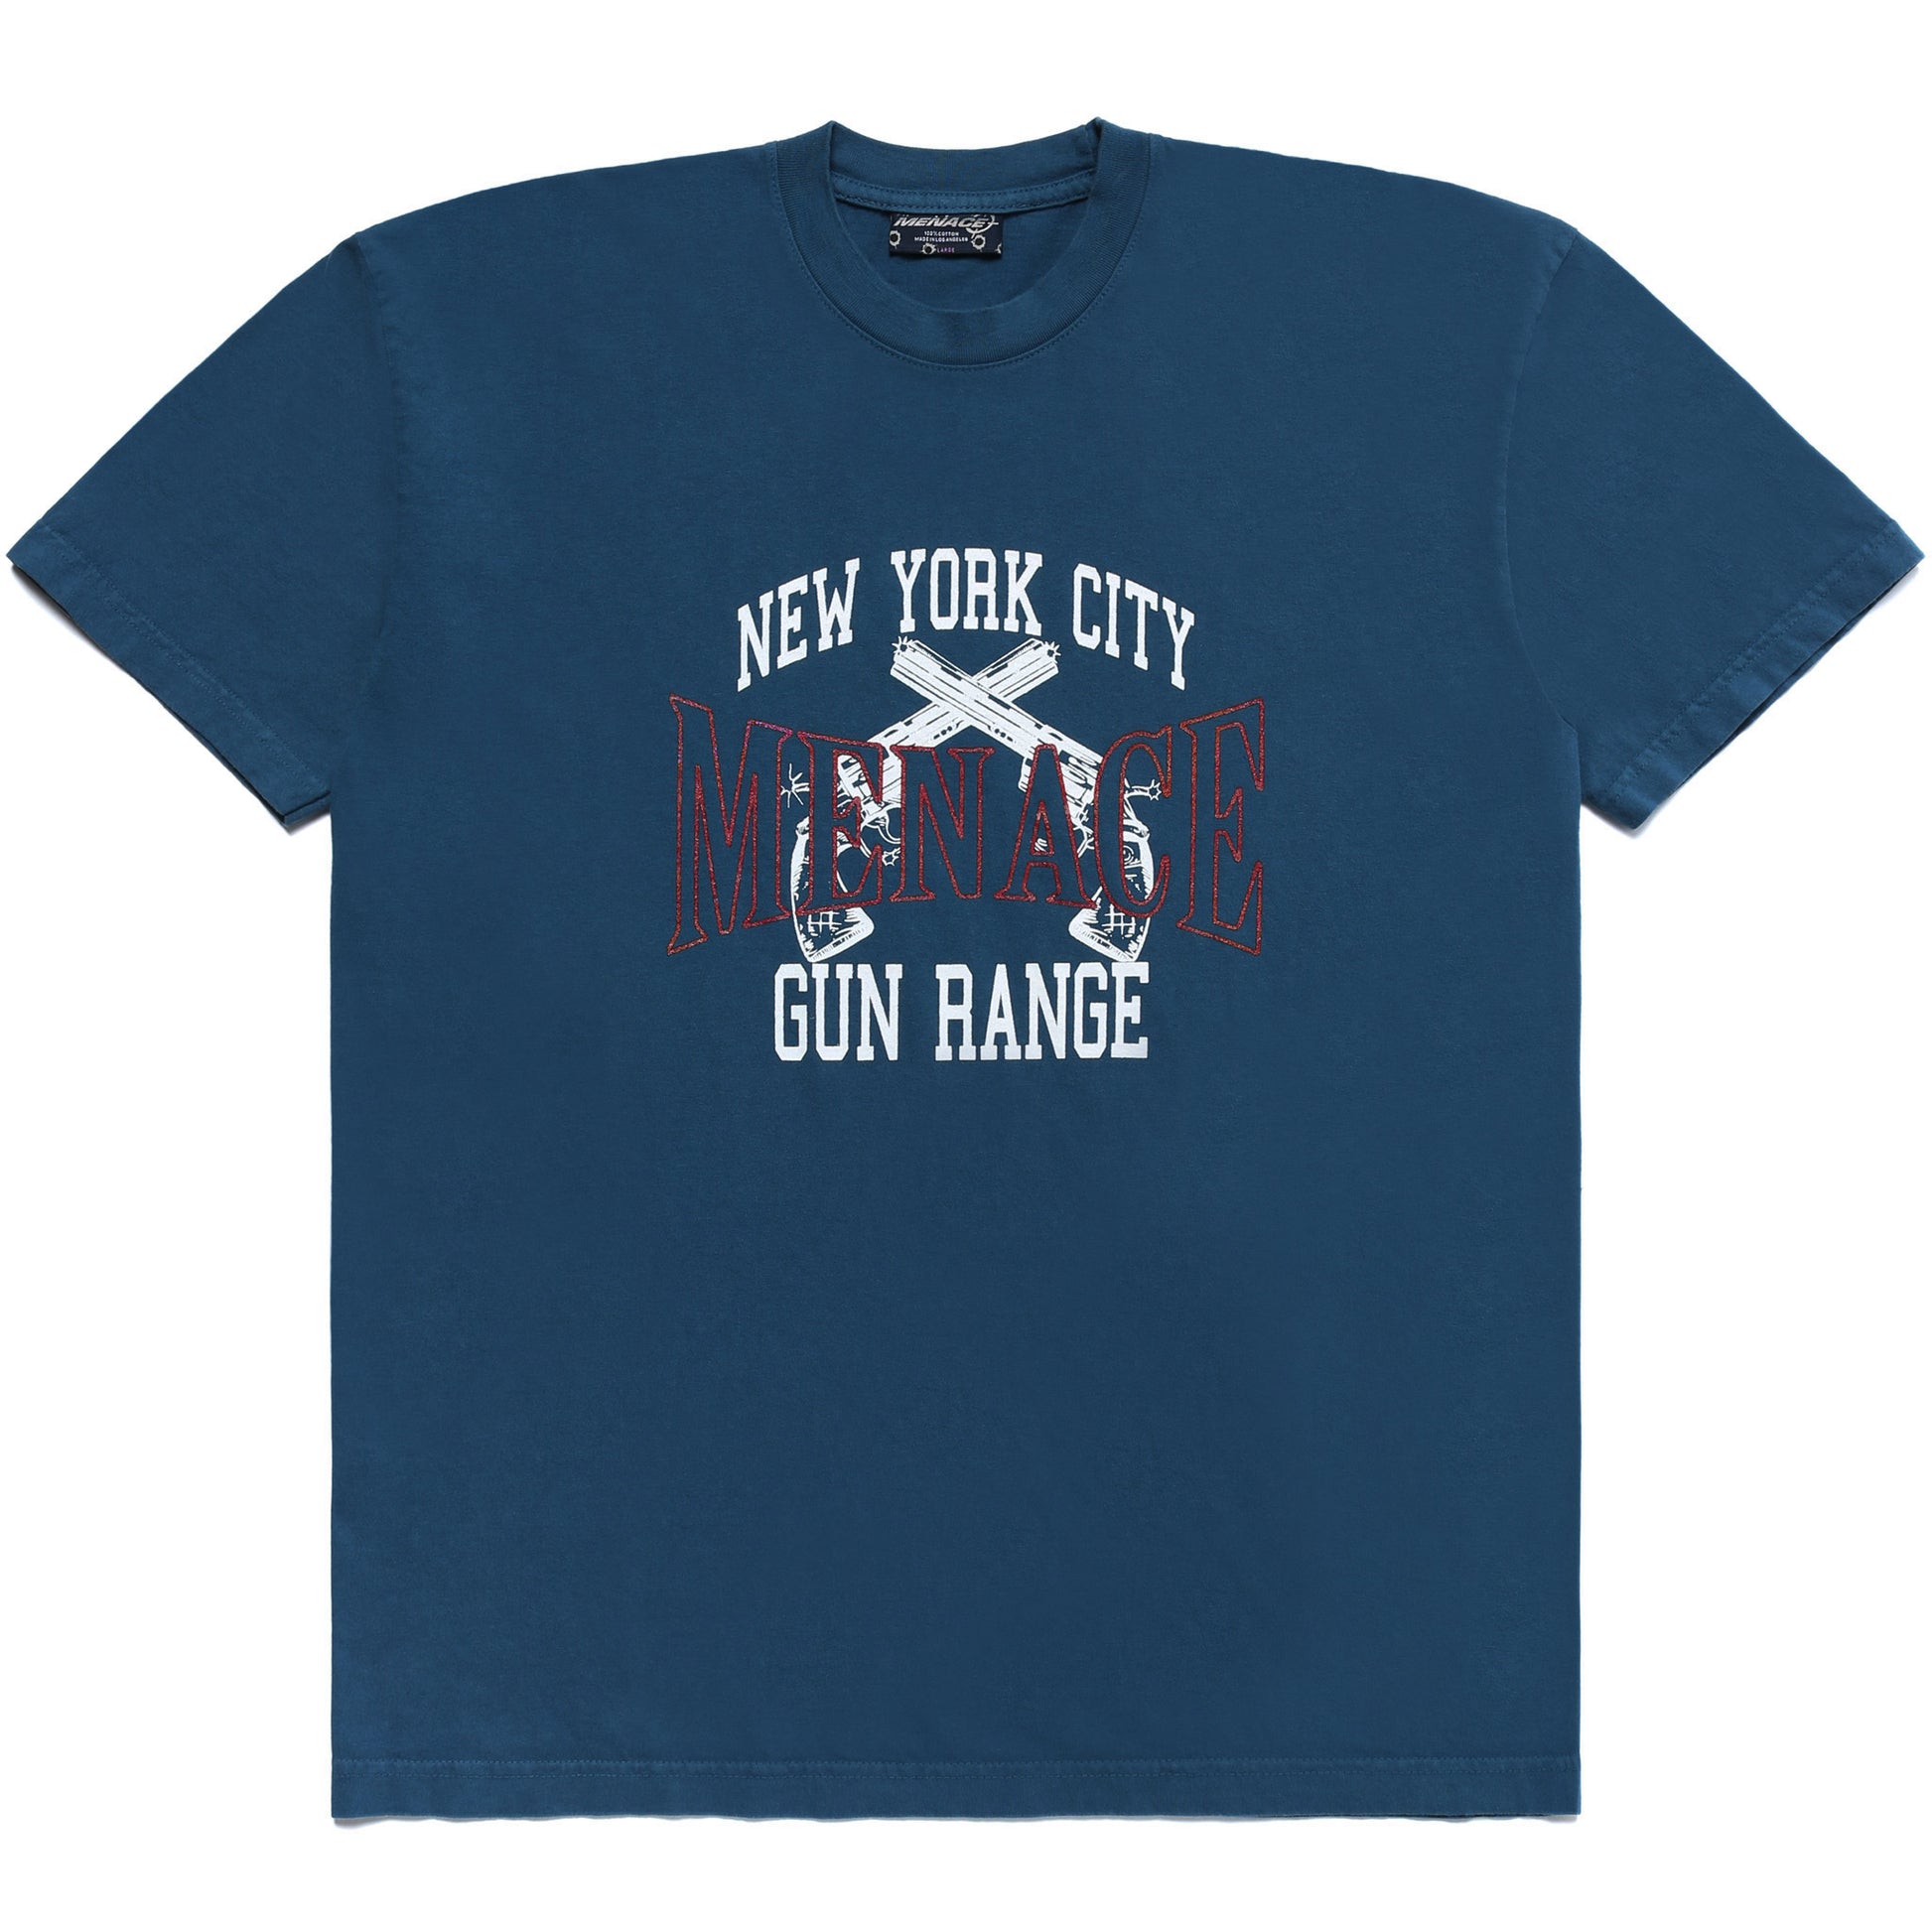 NEW YORK GUN RANGE T-SHIRT by MENACE